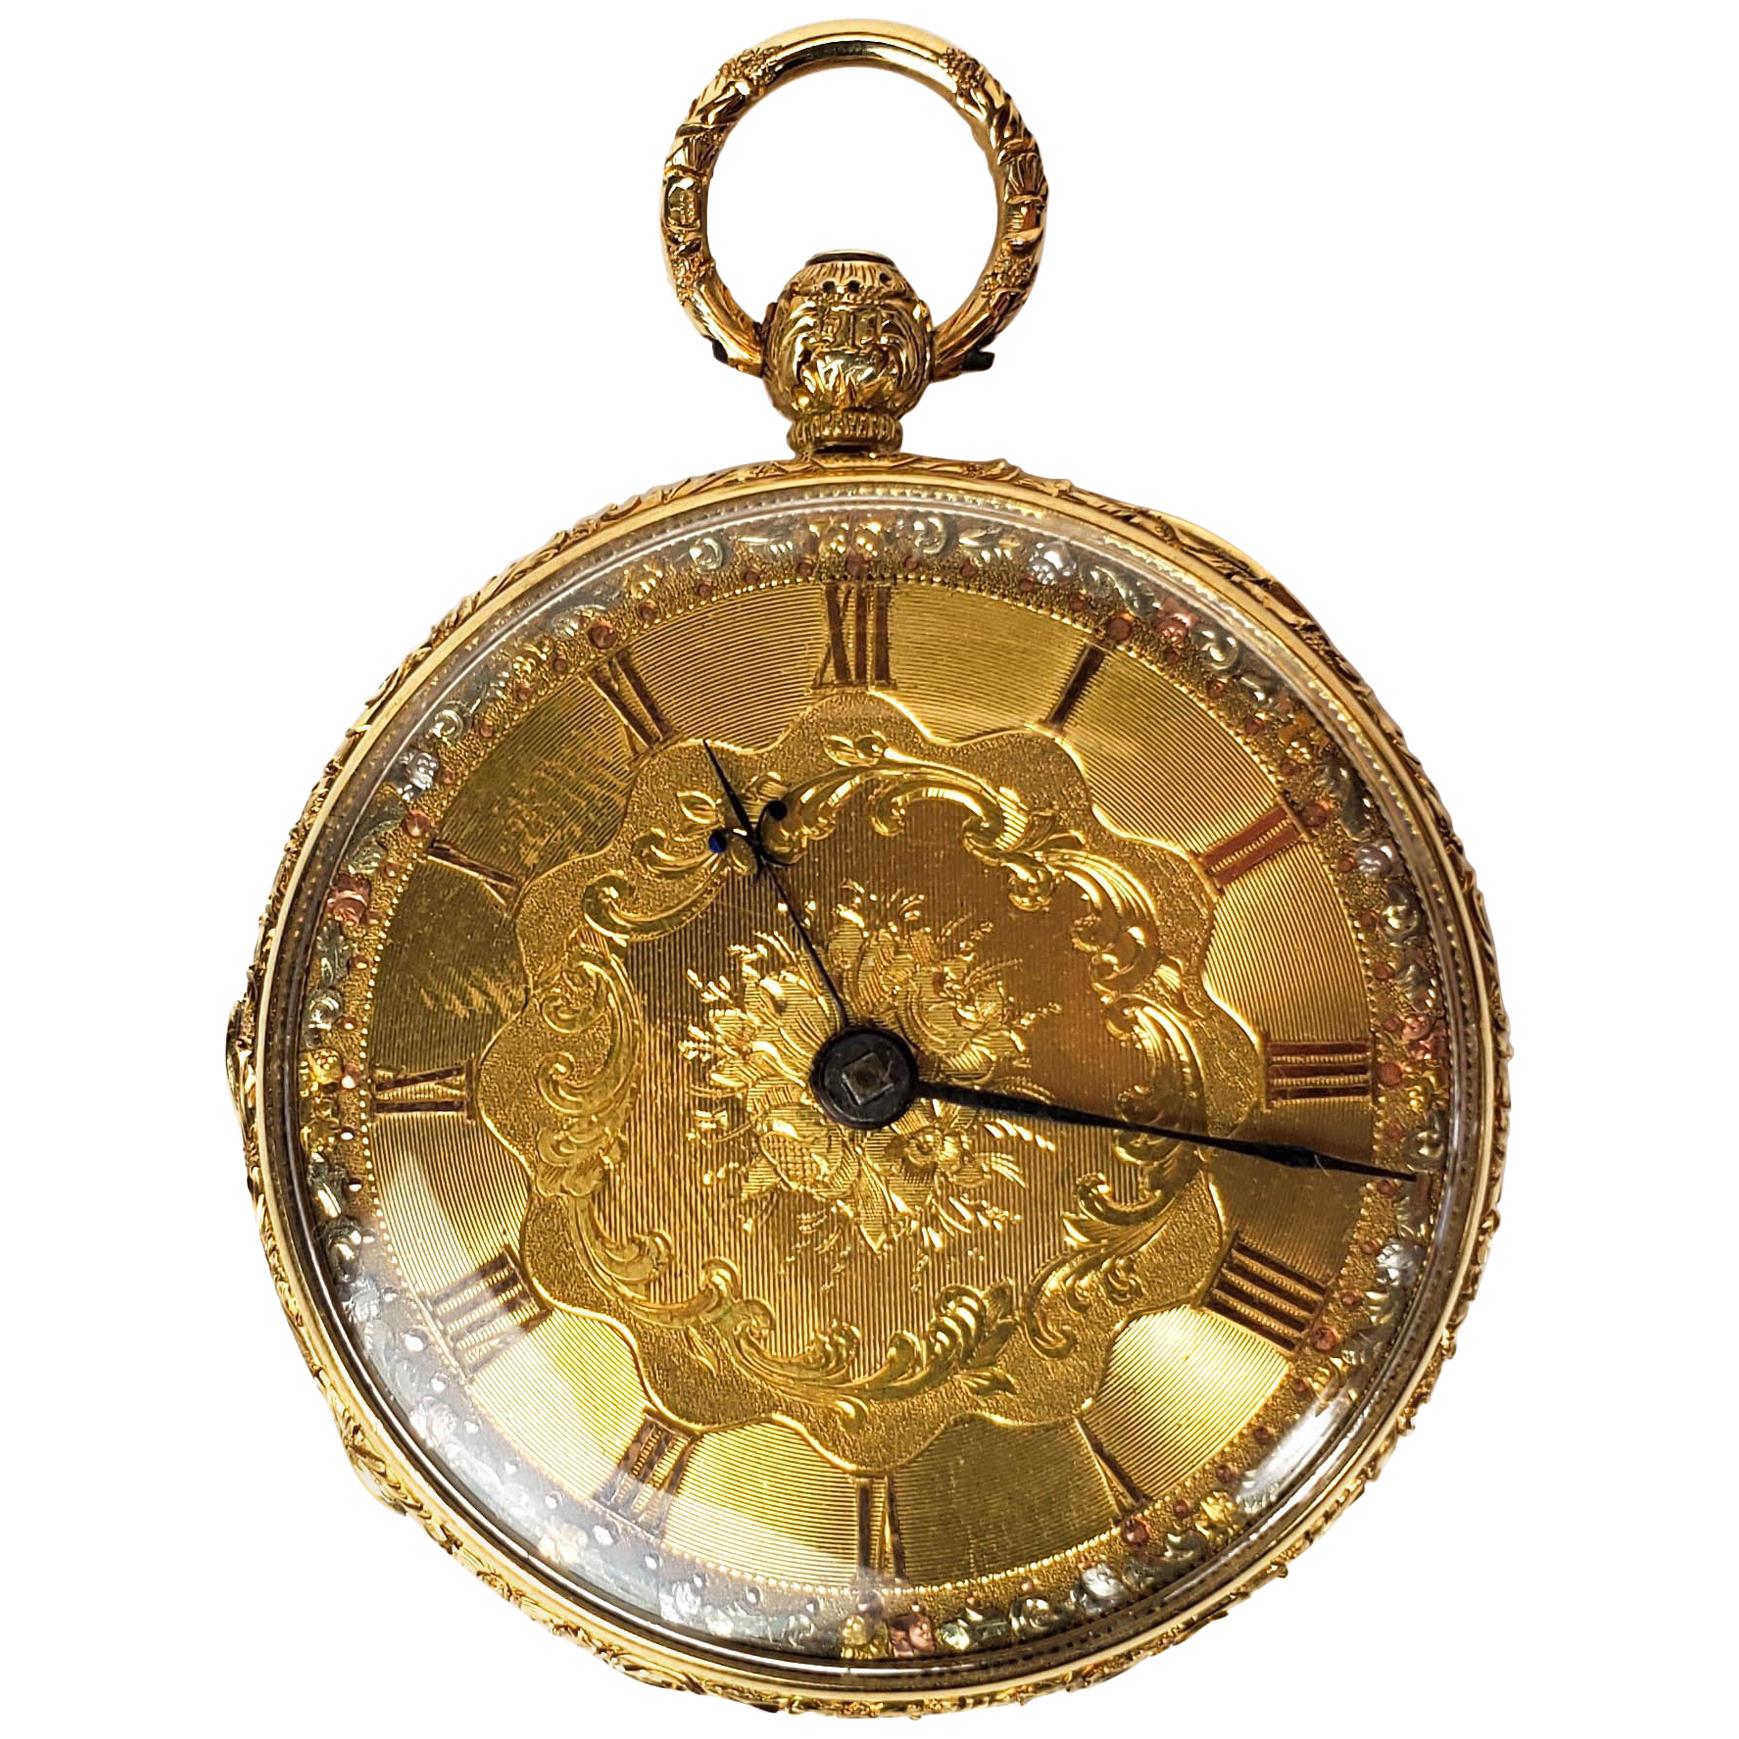 18 Karat Gold Maidstone Watch by Joseph Barling, 19th Century